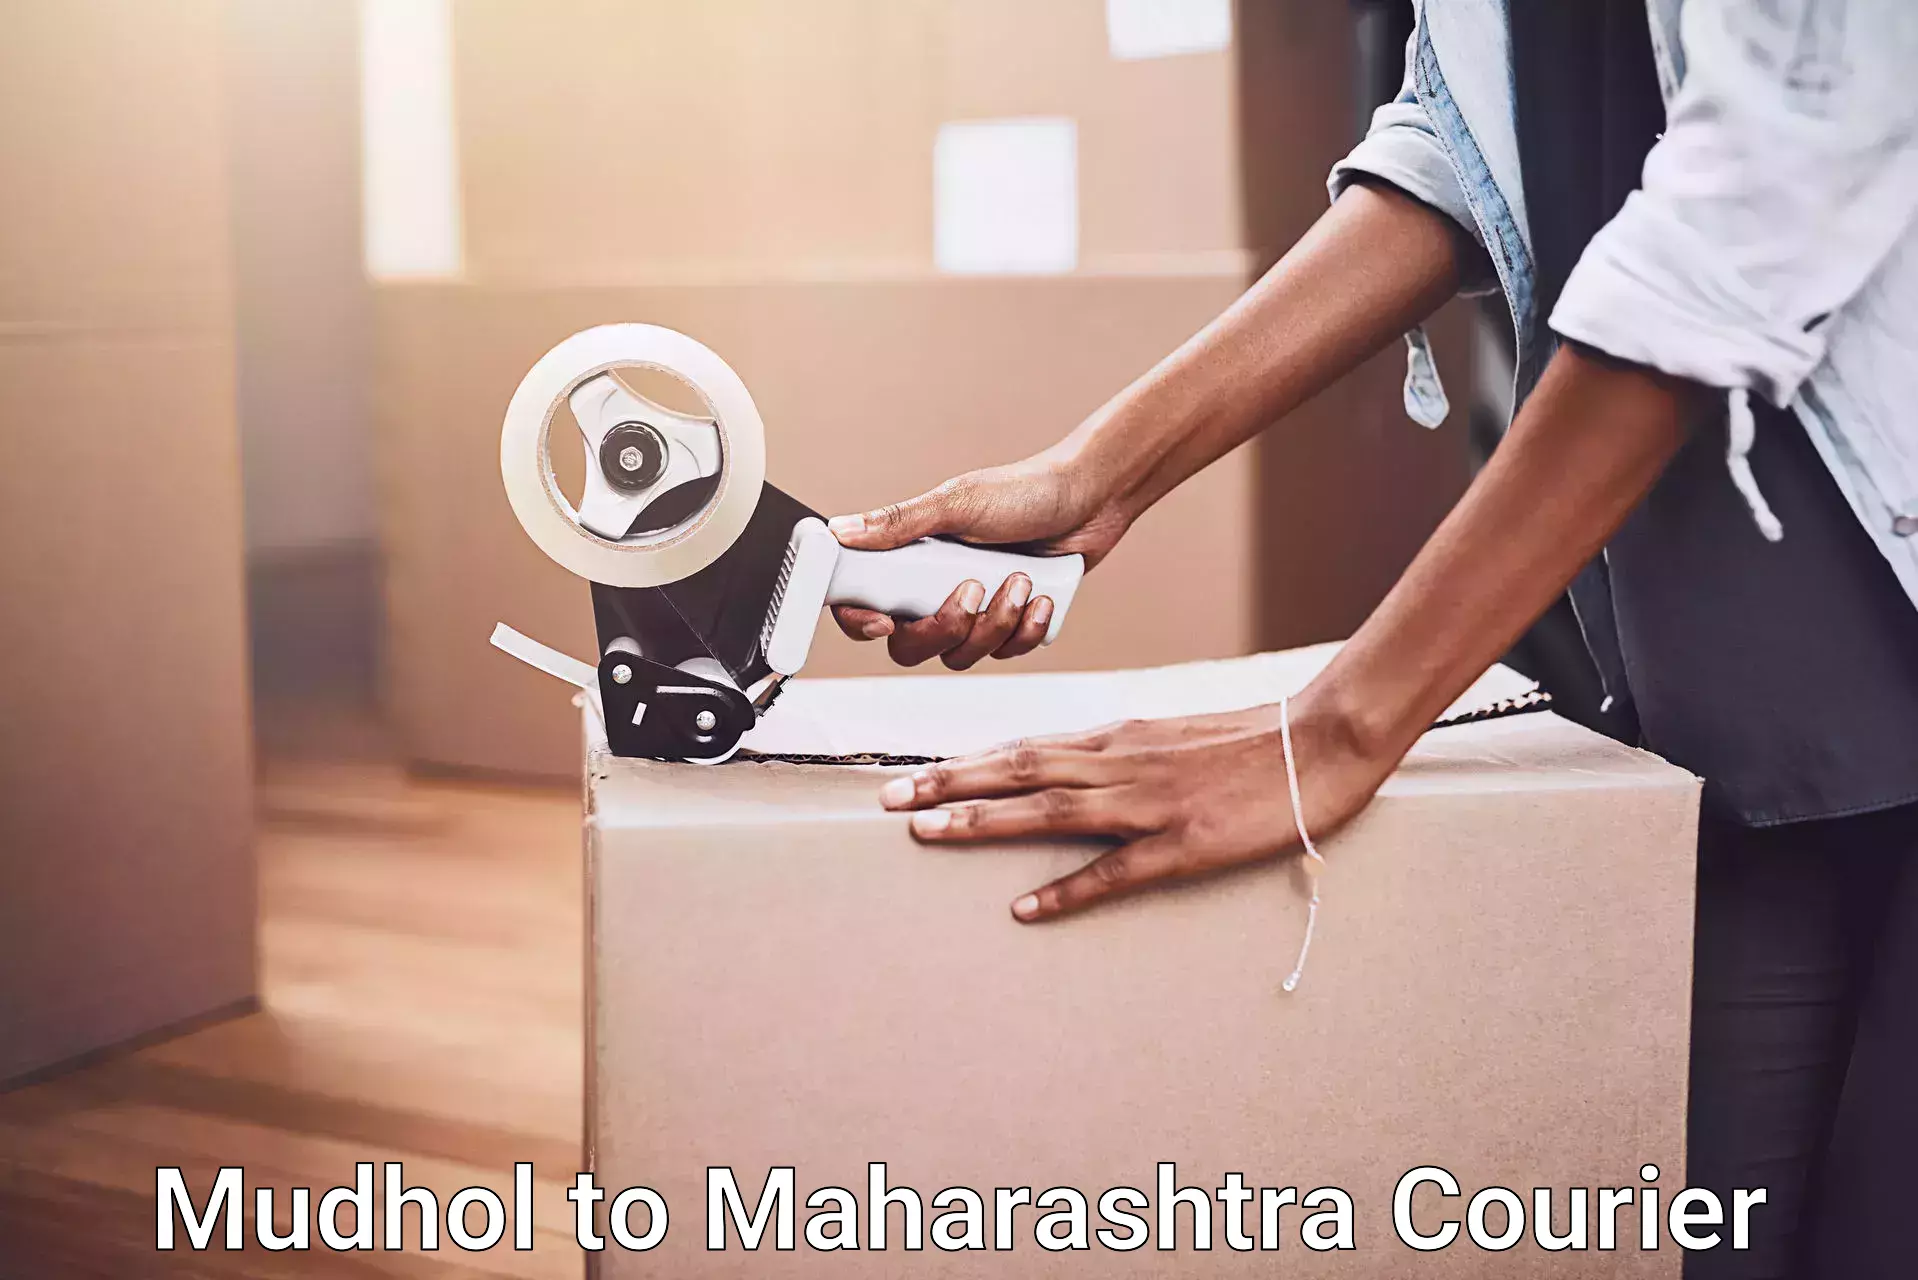 Efficient moving company Mudhol to Navi Mumbai